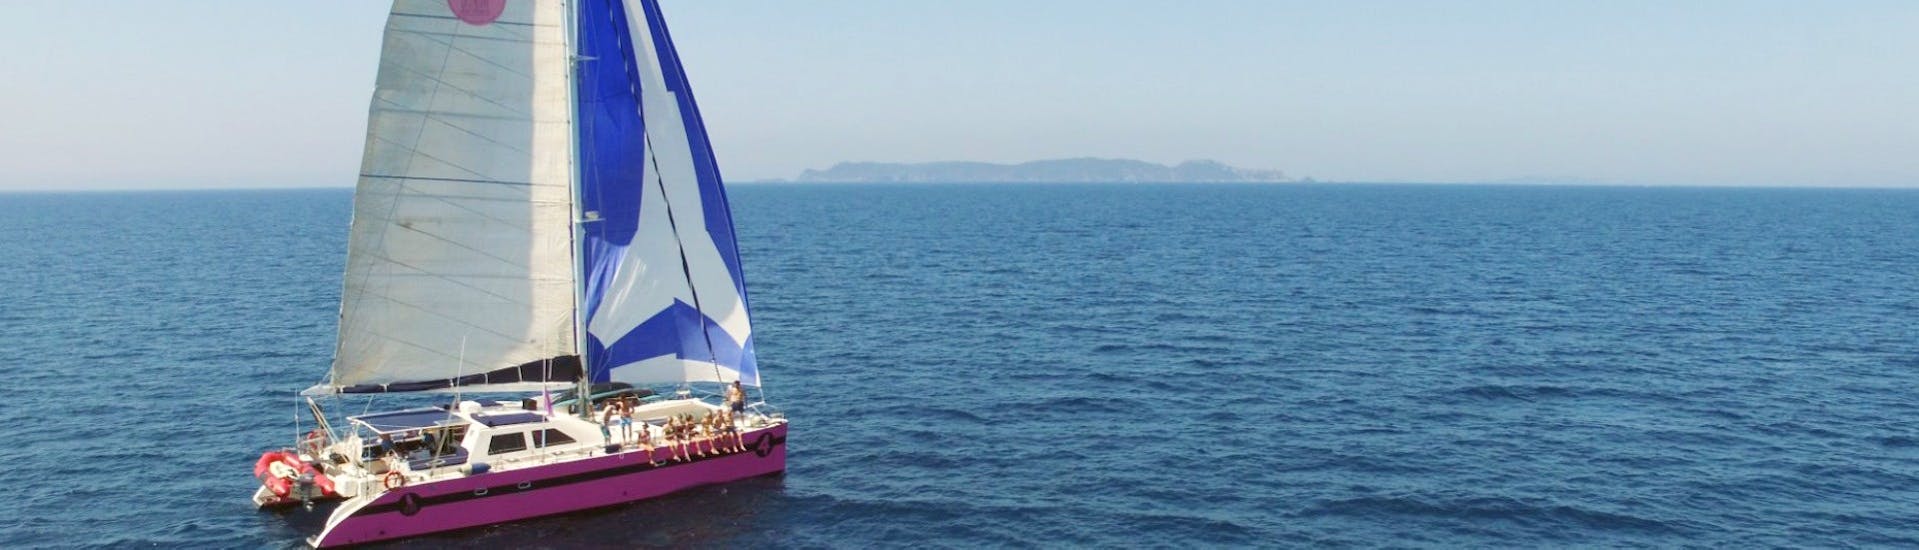 Uitzicht tijdens de Catamarantocht in de Golf van Saint-Tropez vanuit Sainte-Maxime met Caseneuve Maxi Catamaran.